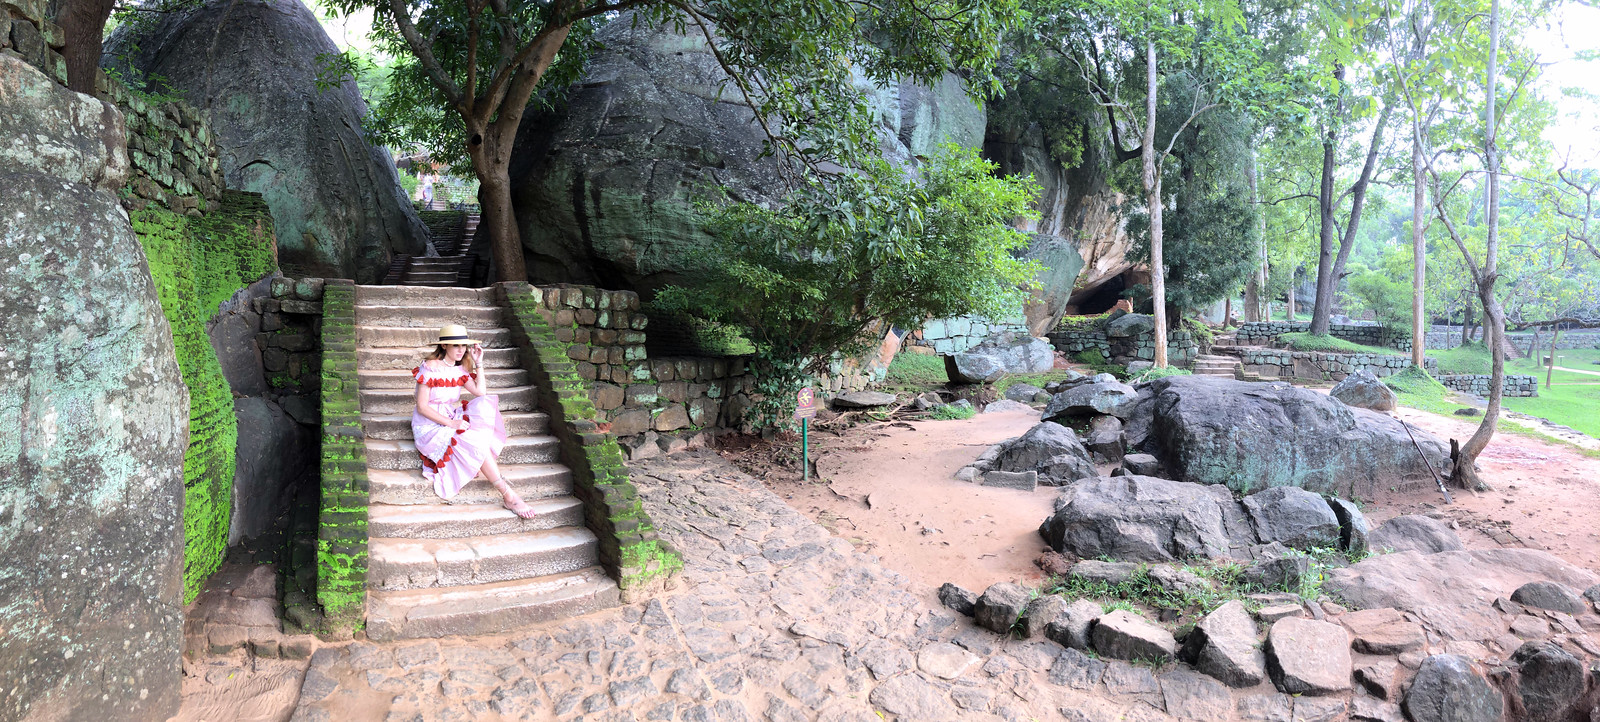 roca de Sigiriya, lion rock, roca del león, Sri Lanka